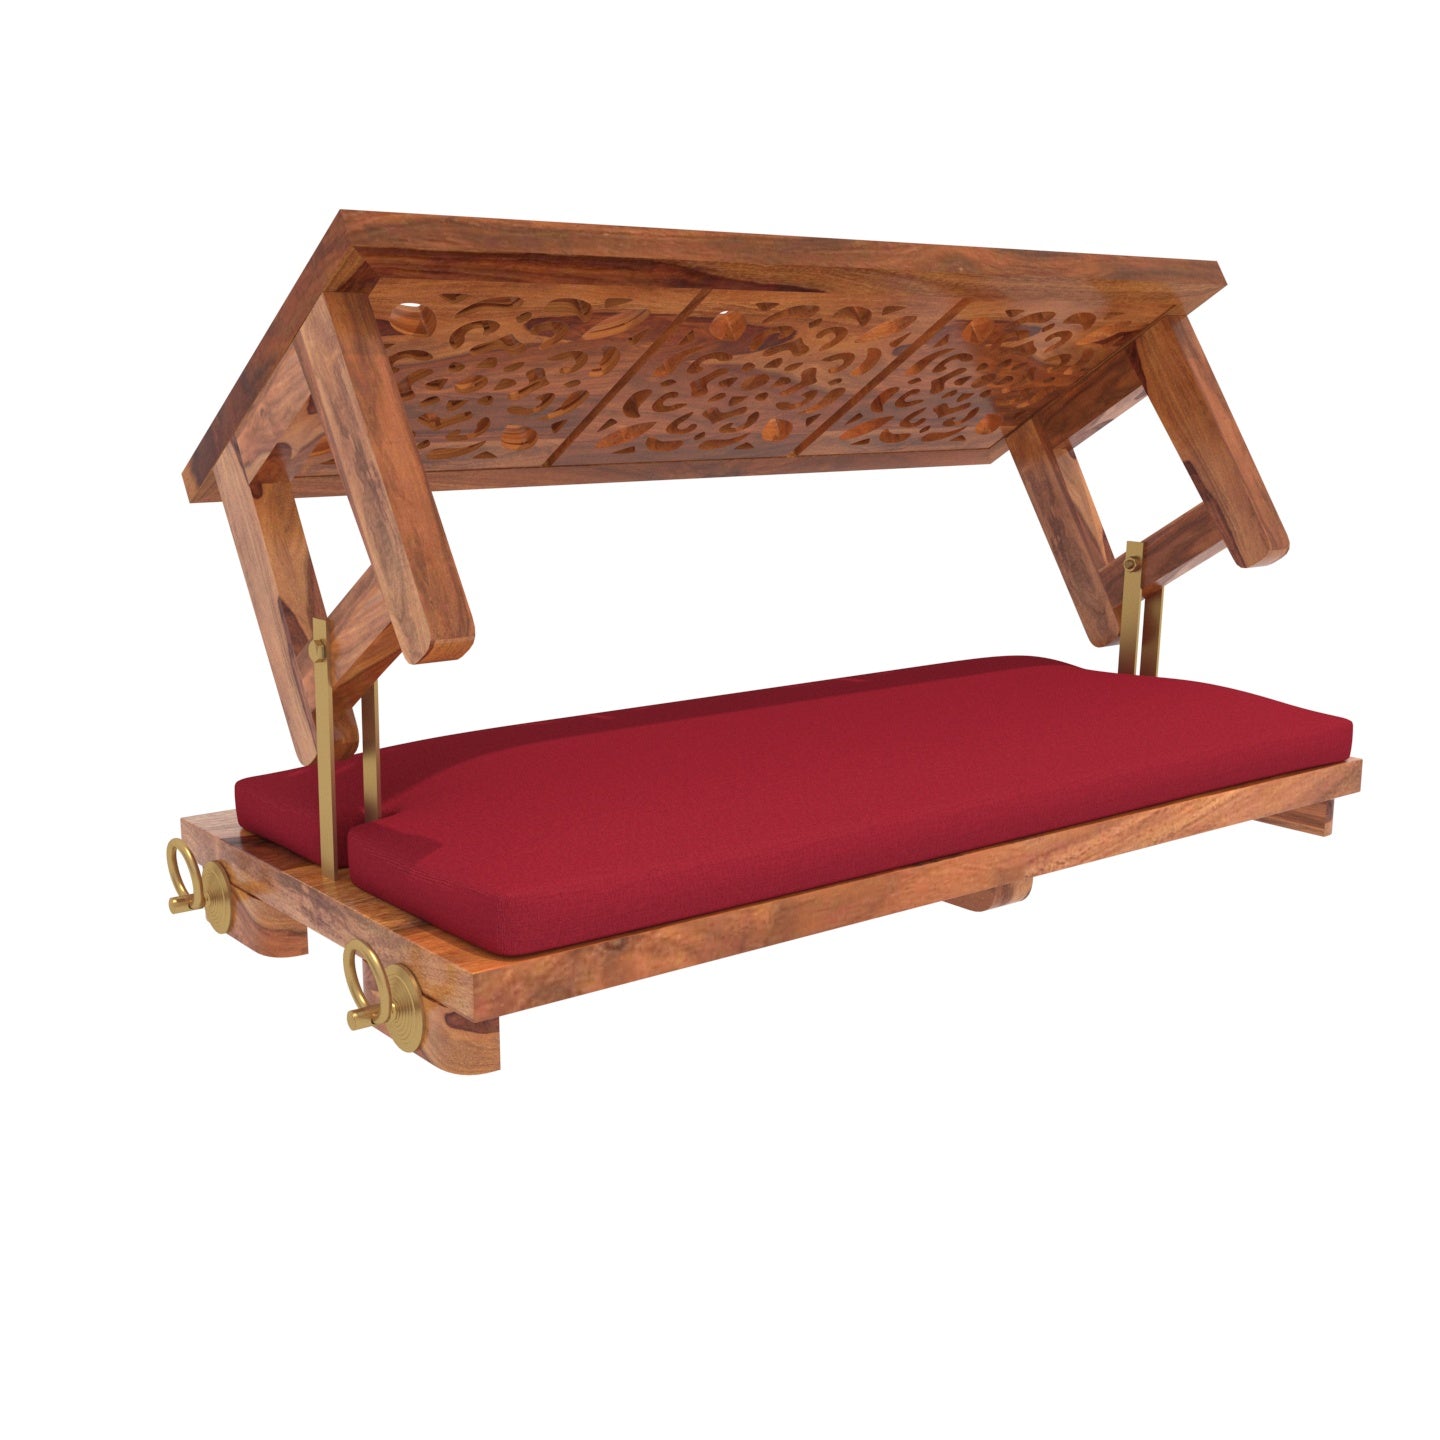 Vintage Carved Back Designed Red Upholstery Handmade Swing for Home Swing